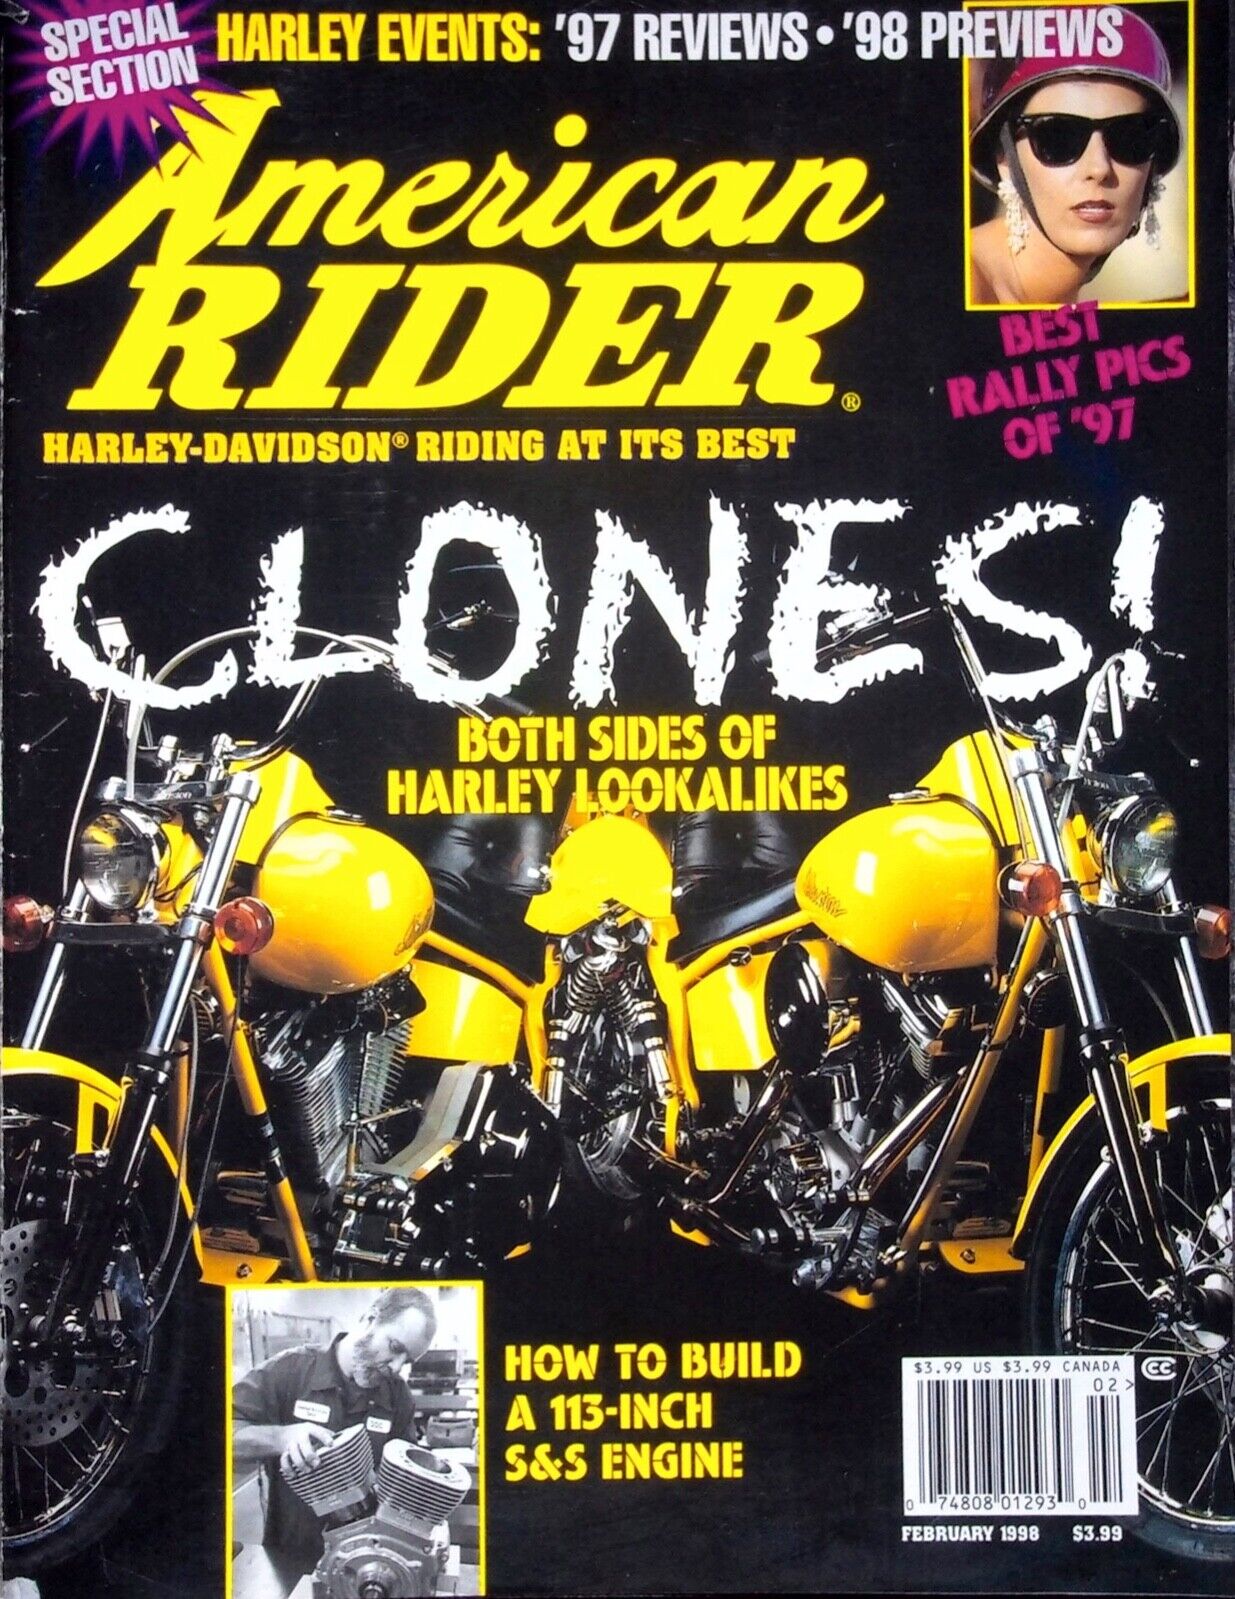 Clones - American Rider Magazine, February 1998 Volume 5. Number 1